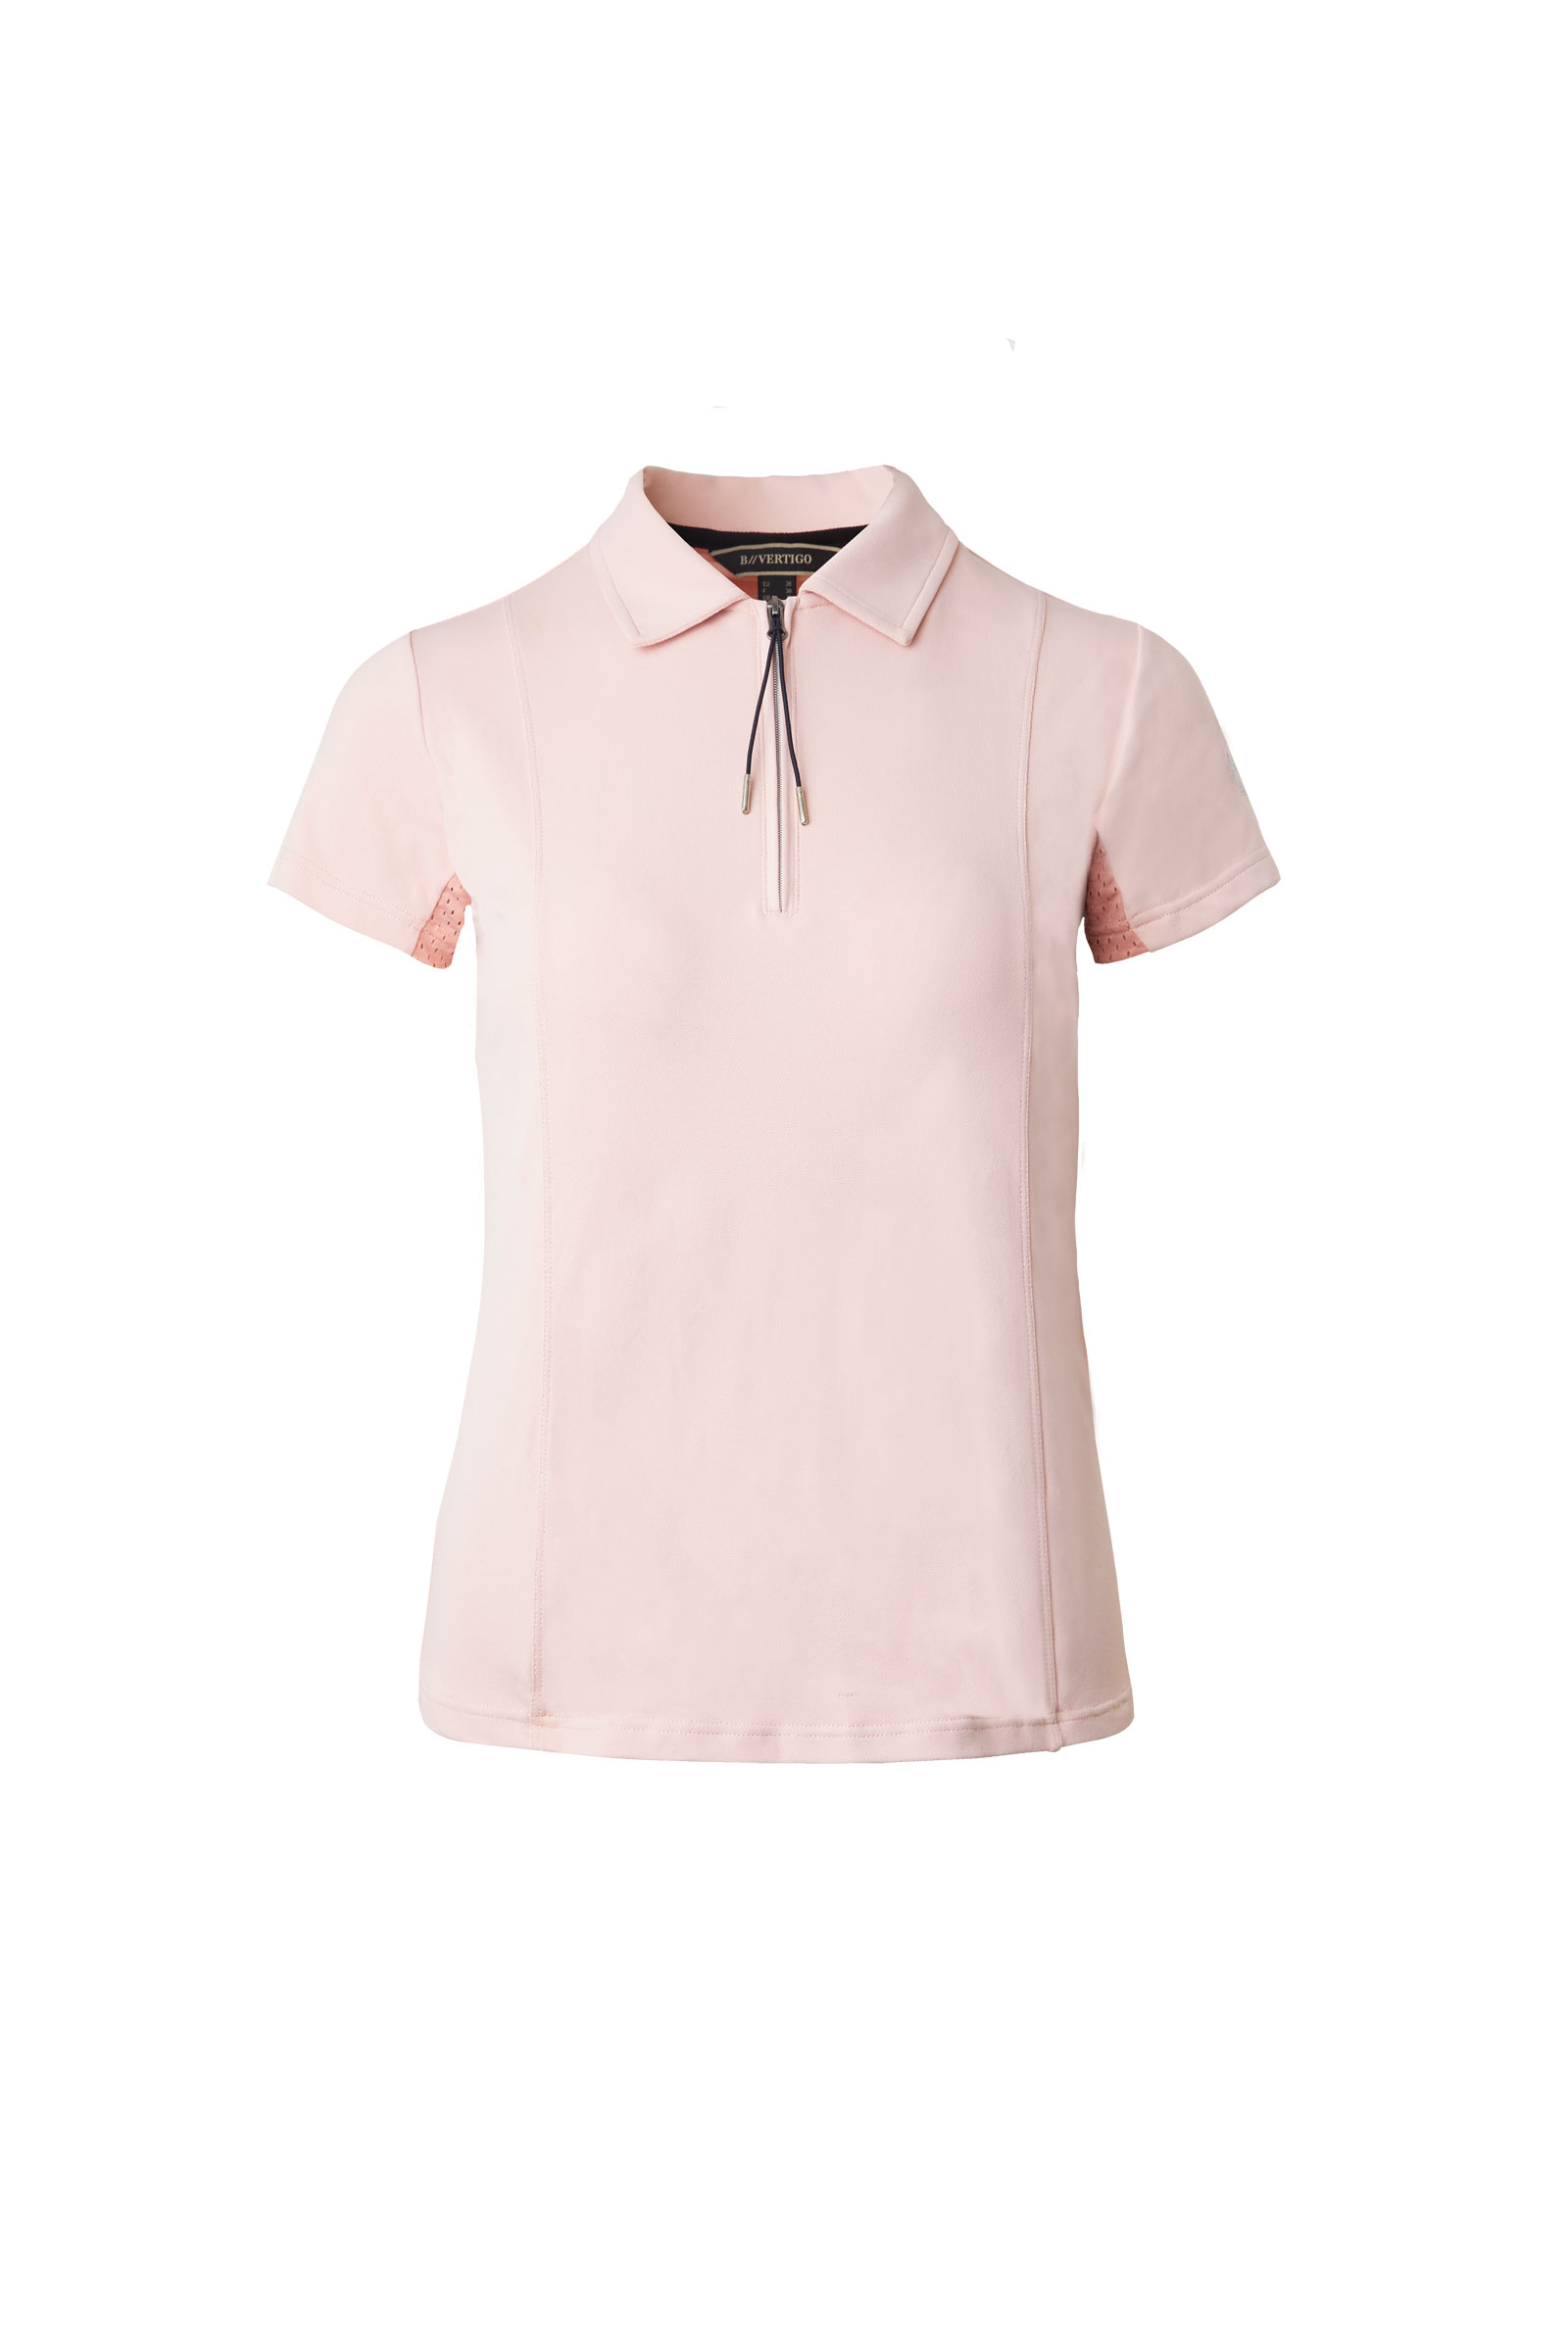 Buy Horze Amy Women's Short Sleeve Cotton Stretch Polo Shirt